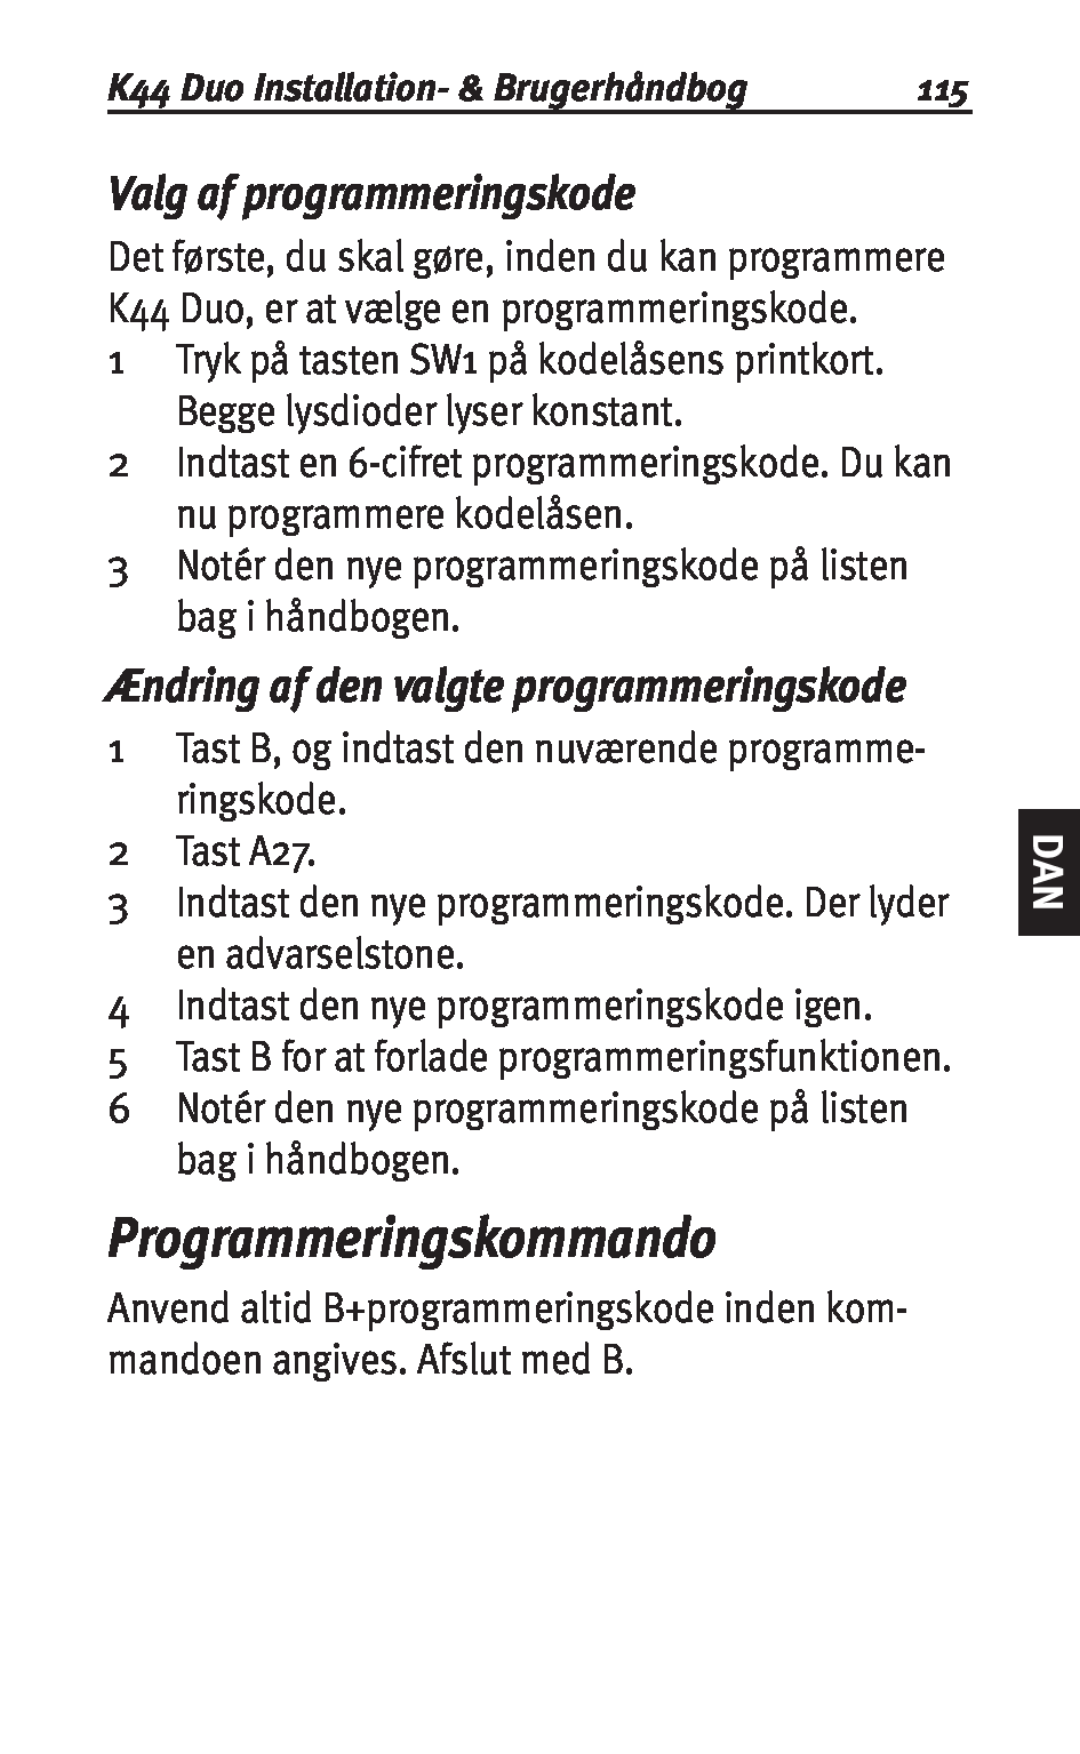 Siemens K44 user manual Programmeringskommando, Valg af programmeringskode, Ændring af den valgte programmeringskode 